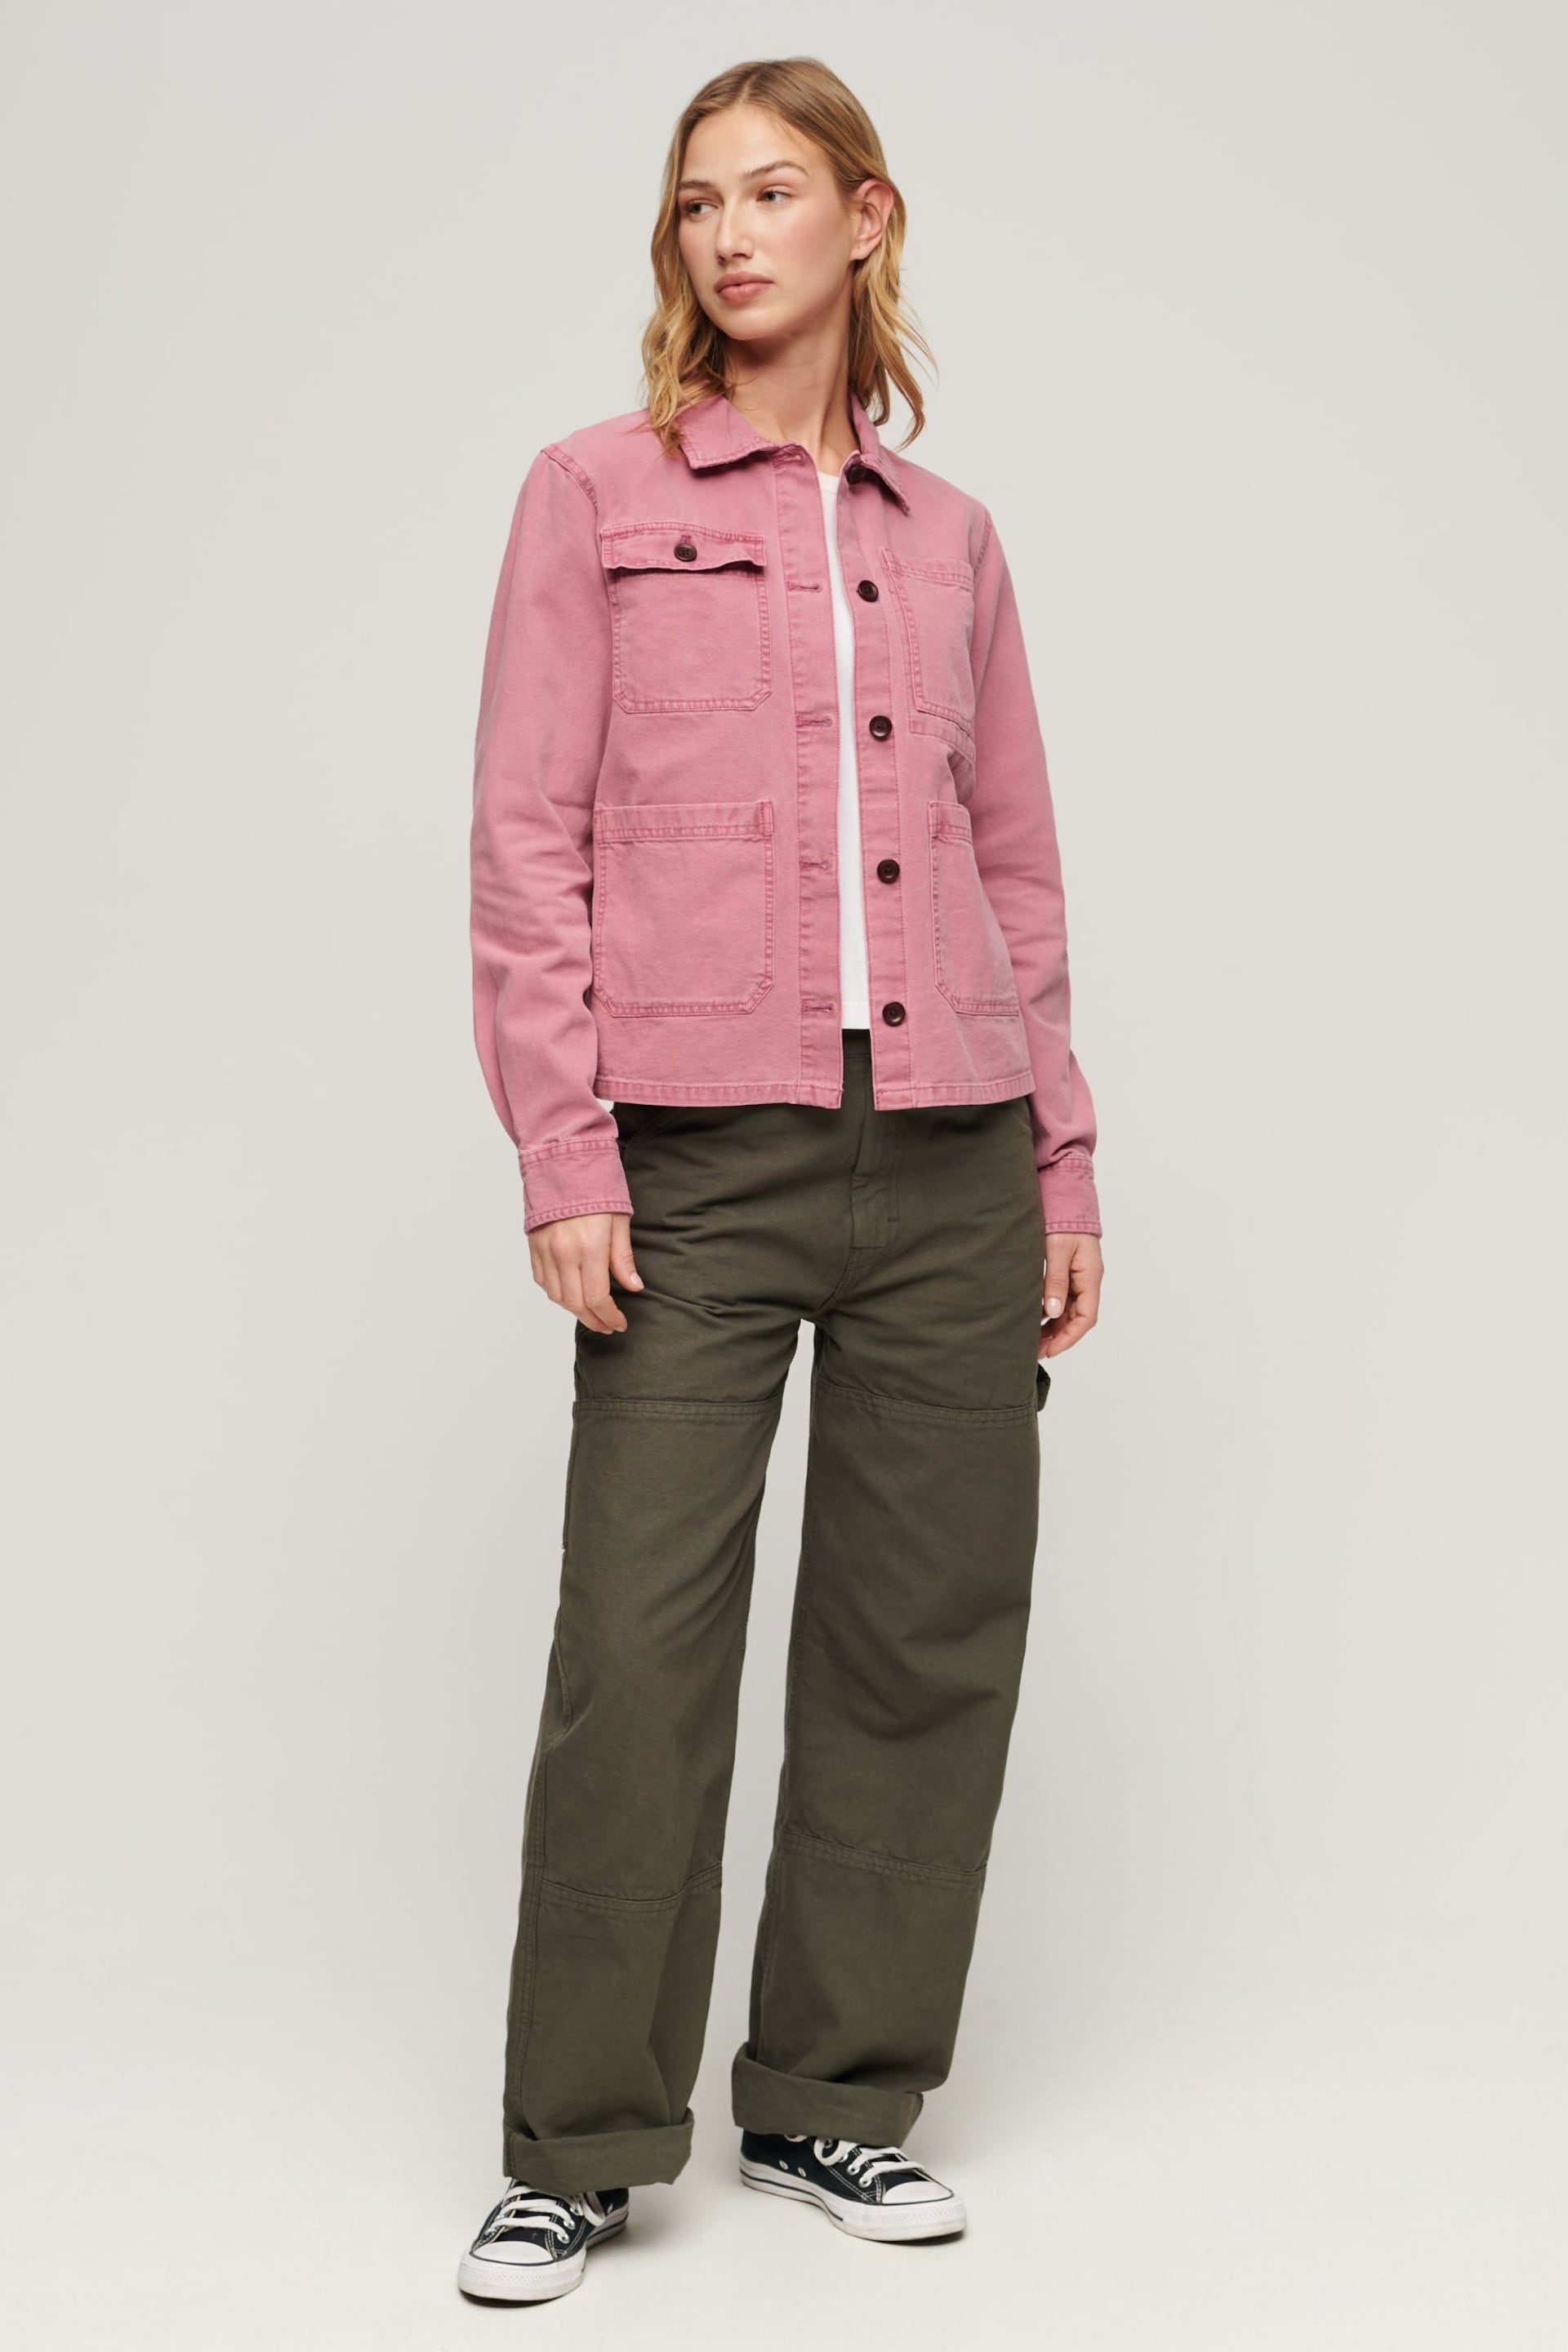 Superdry Pink Four Pocket Chore Jacket - Image 3 of 3